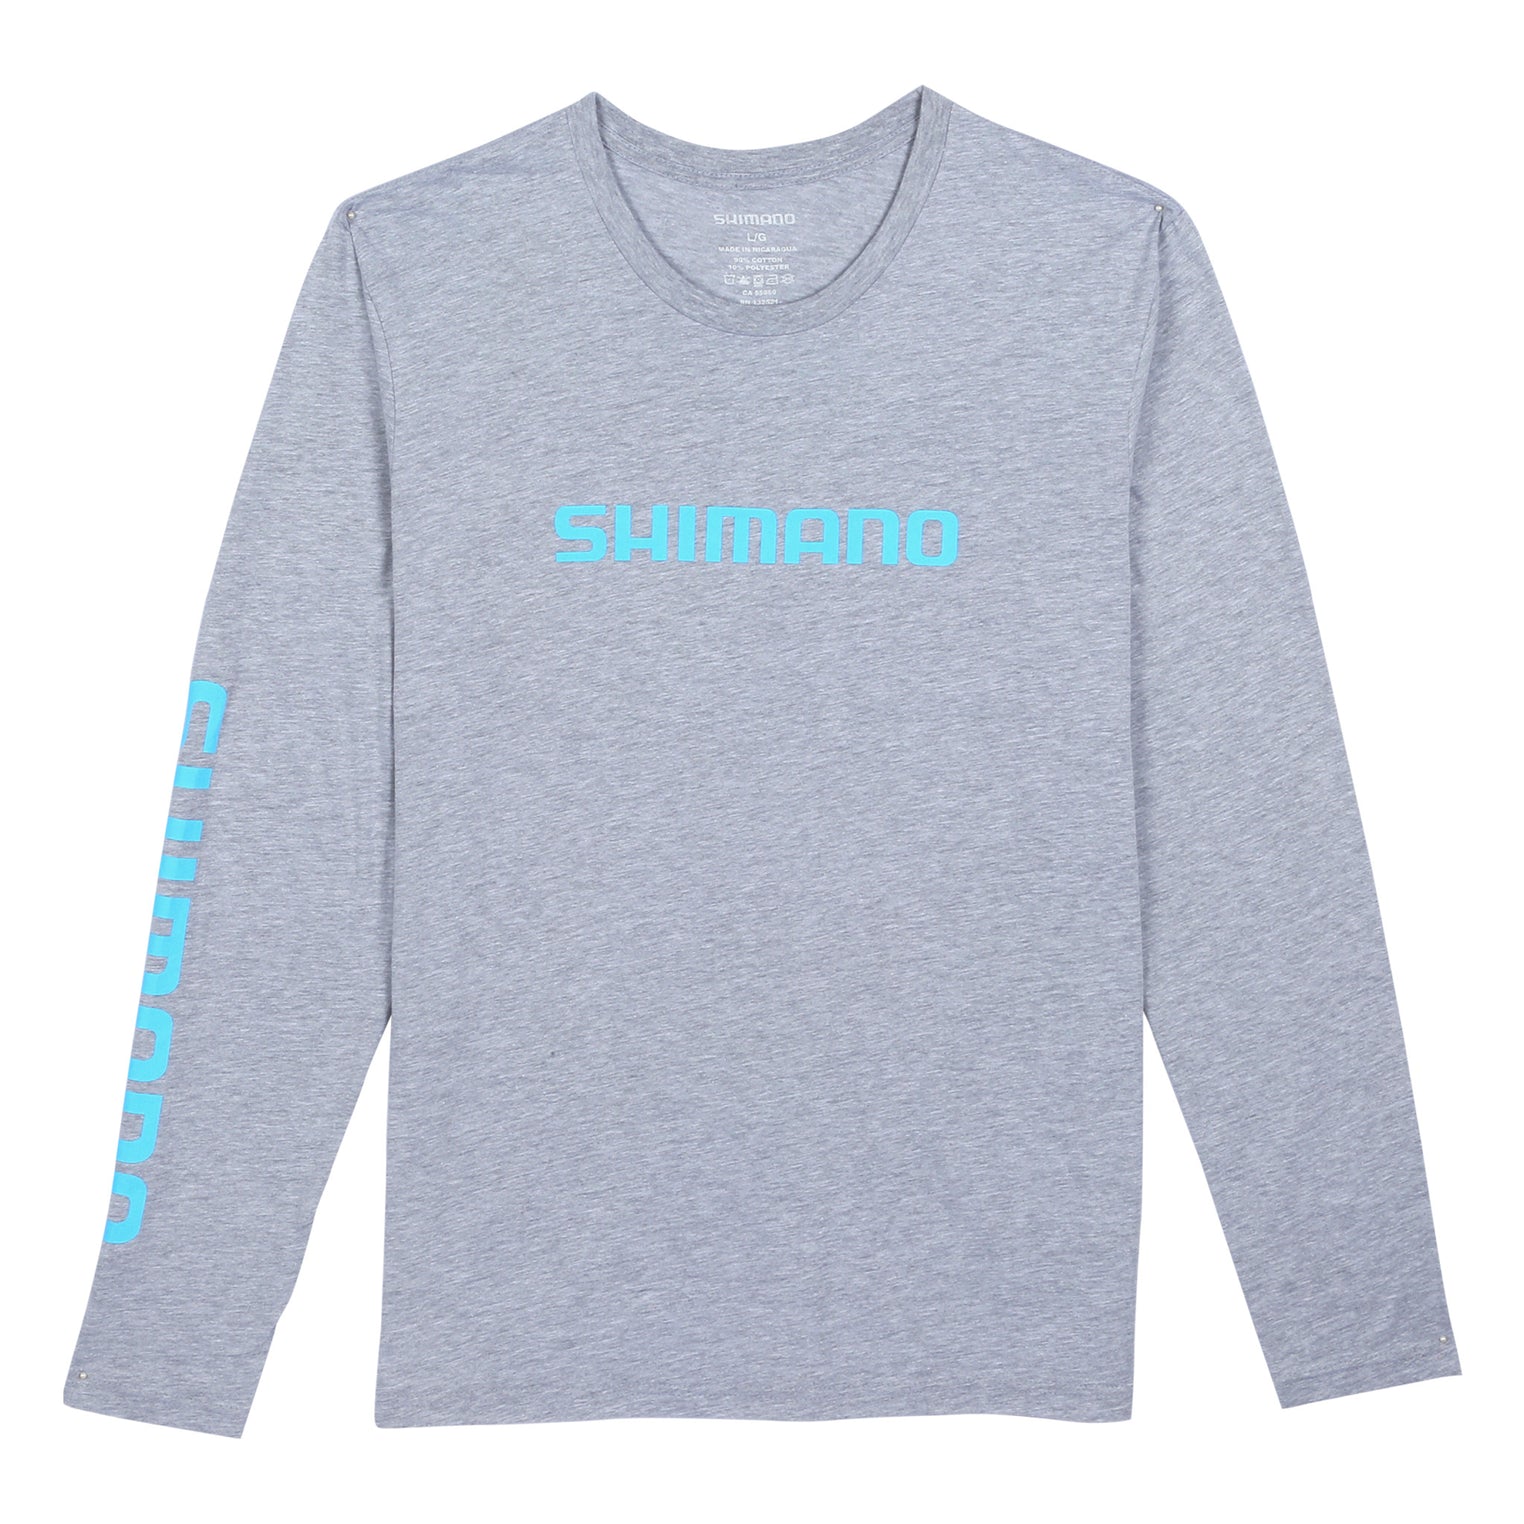 Shimano T-Shirt 2020 Black XL